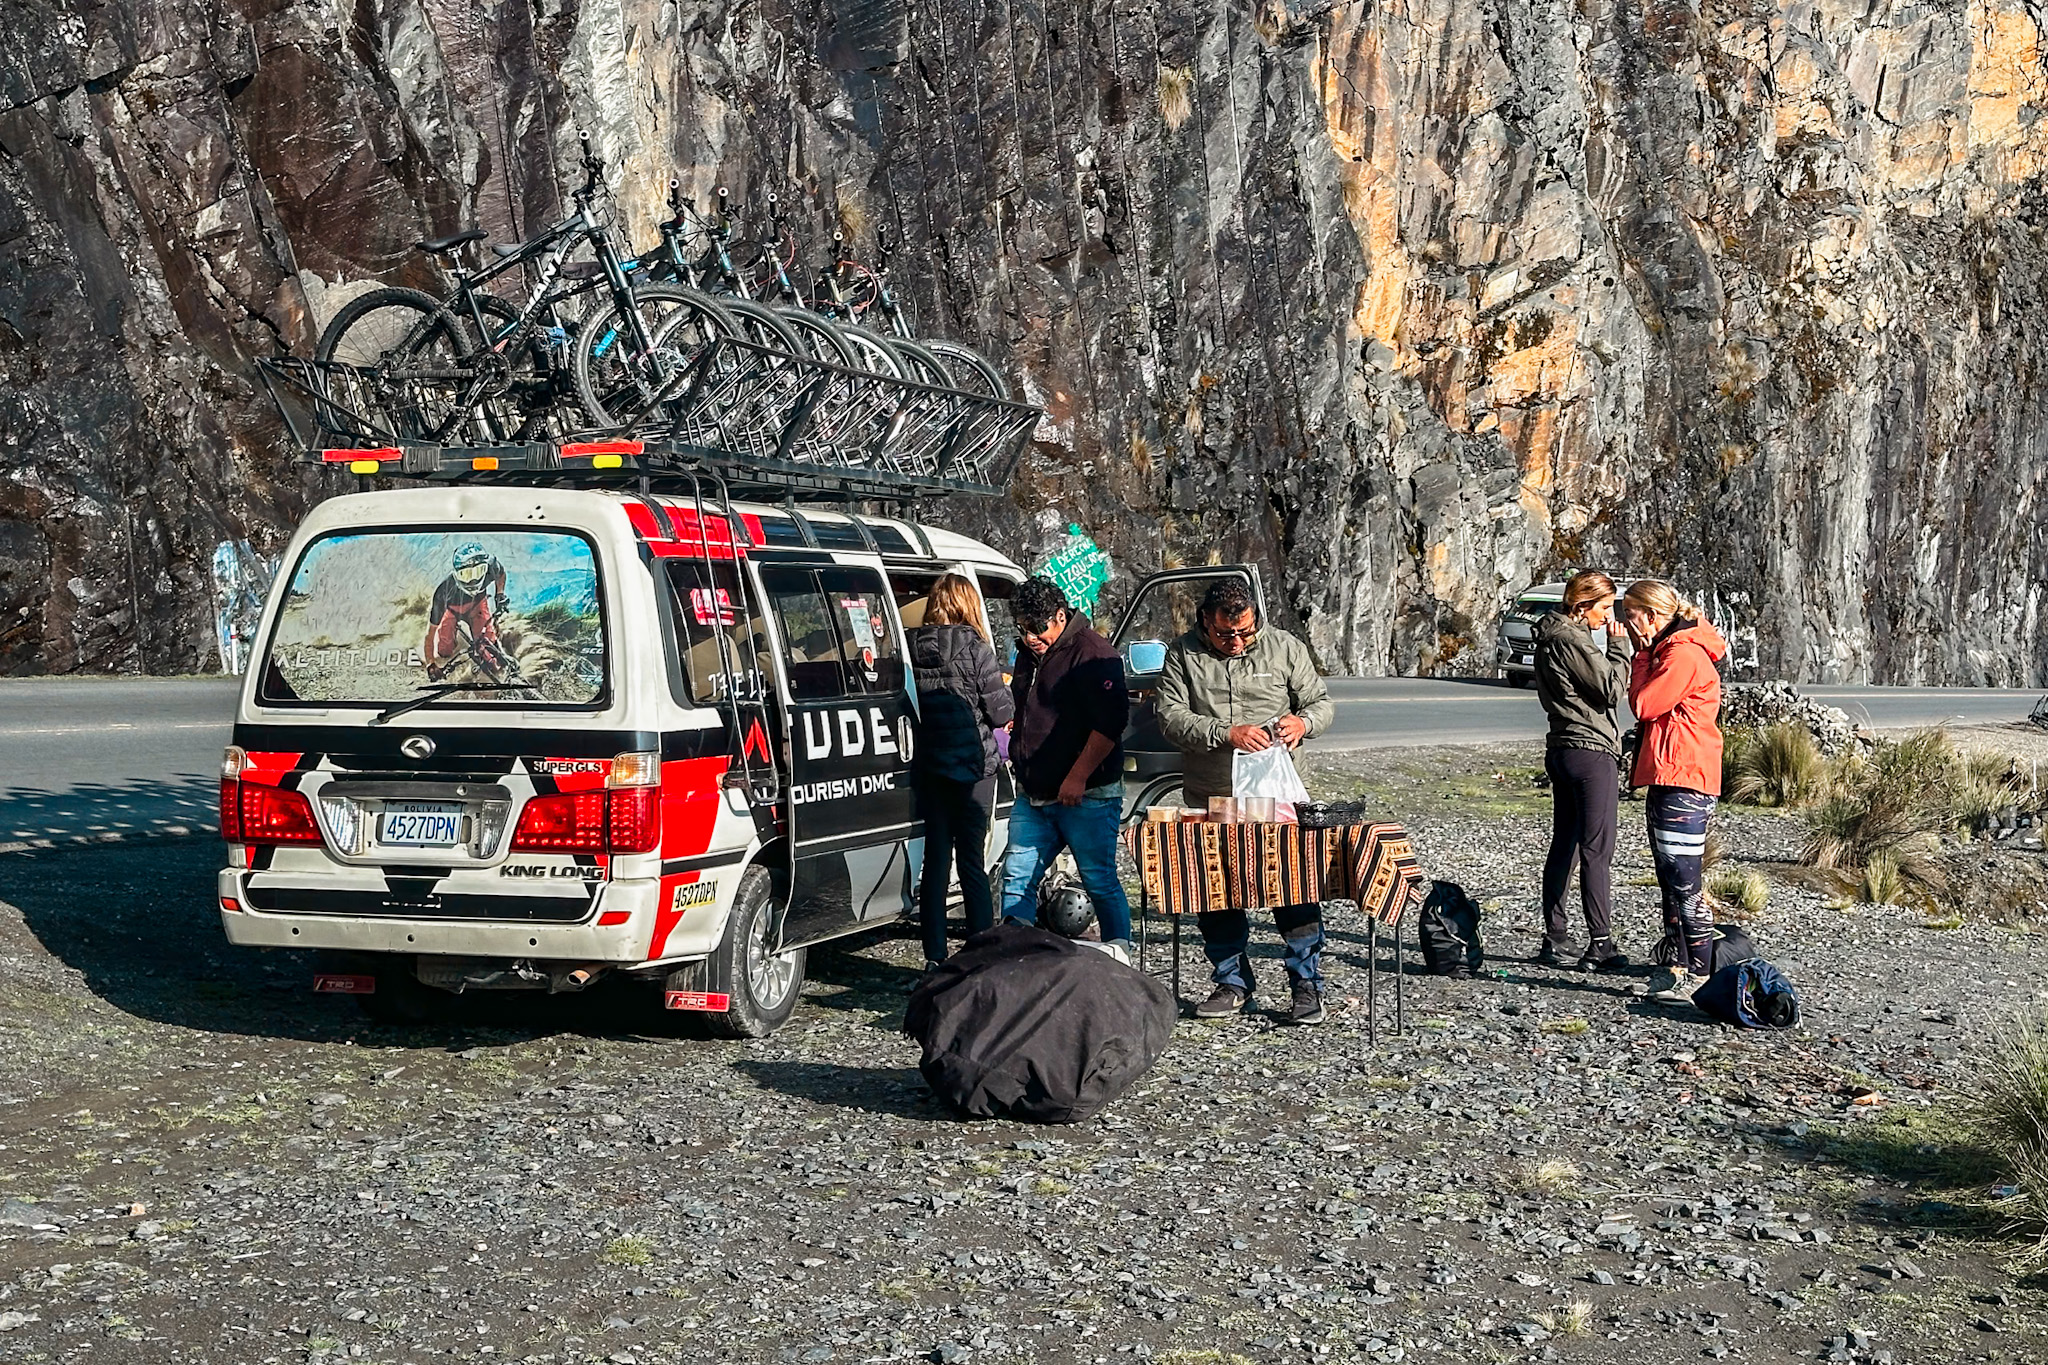 Biking Death Road in Bolivia: Bikers preparing to embark their journey down the Death Road